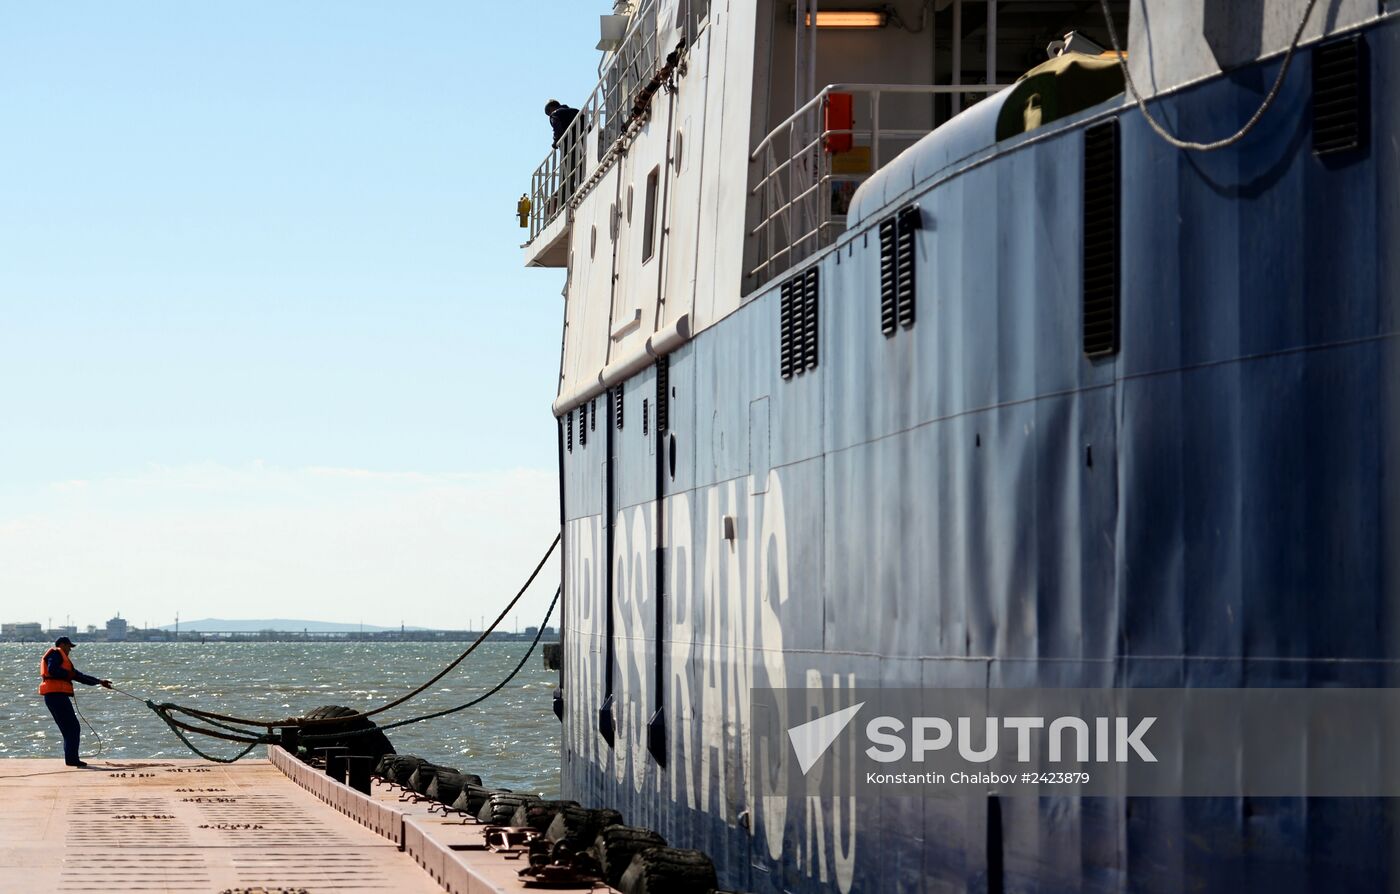 Kerch Strait ferry line